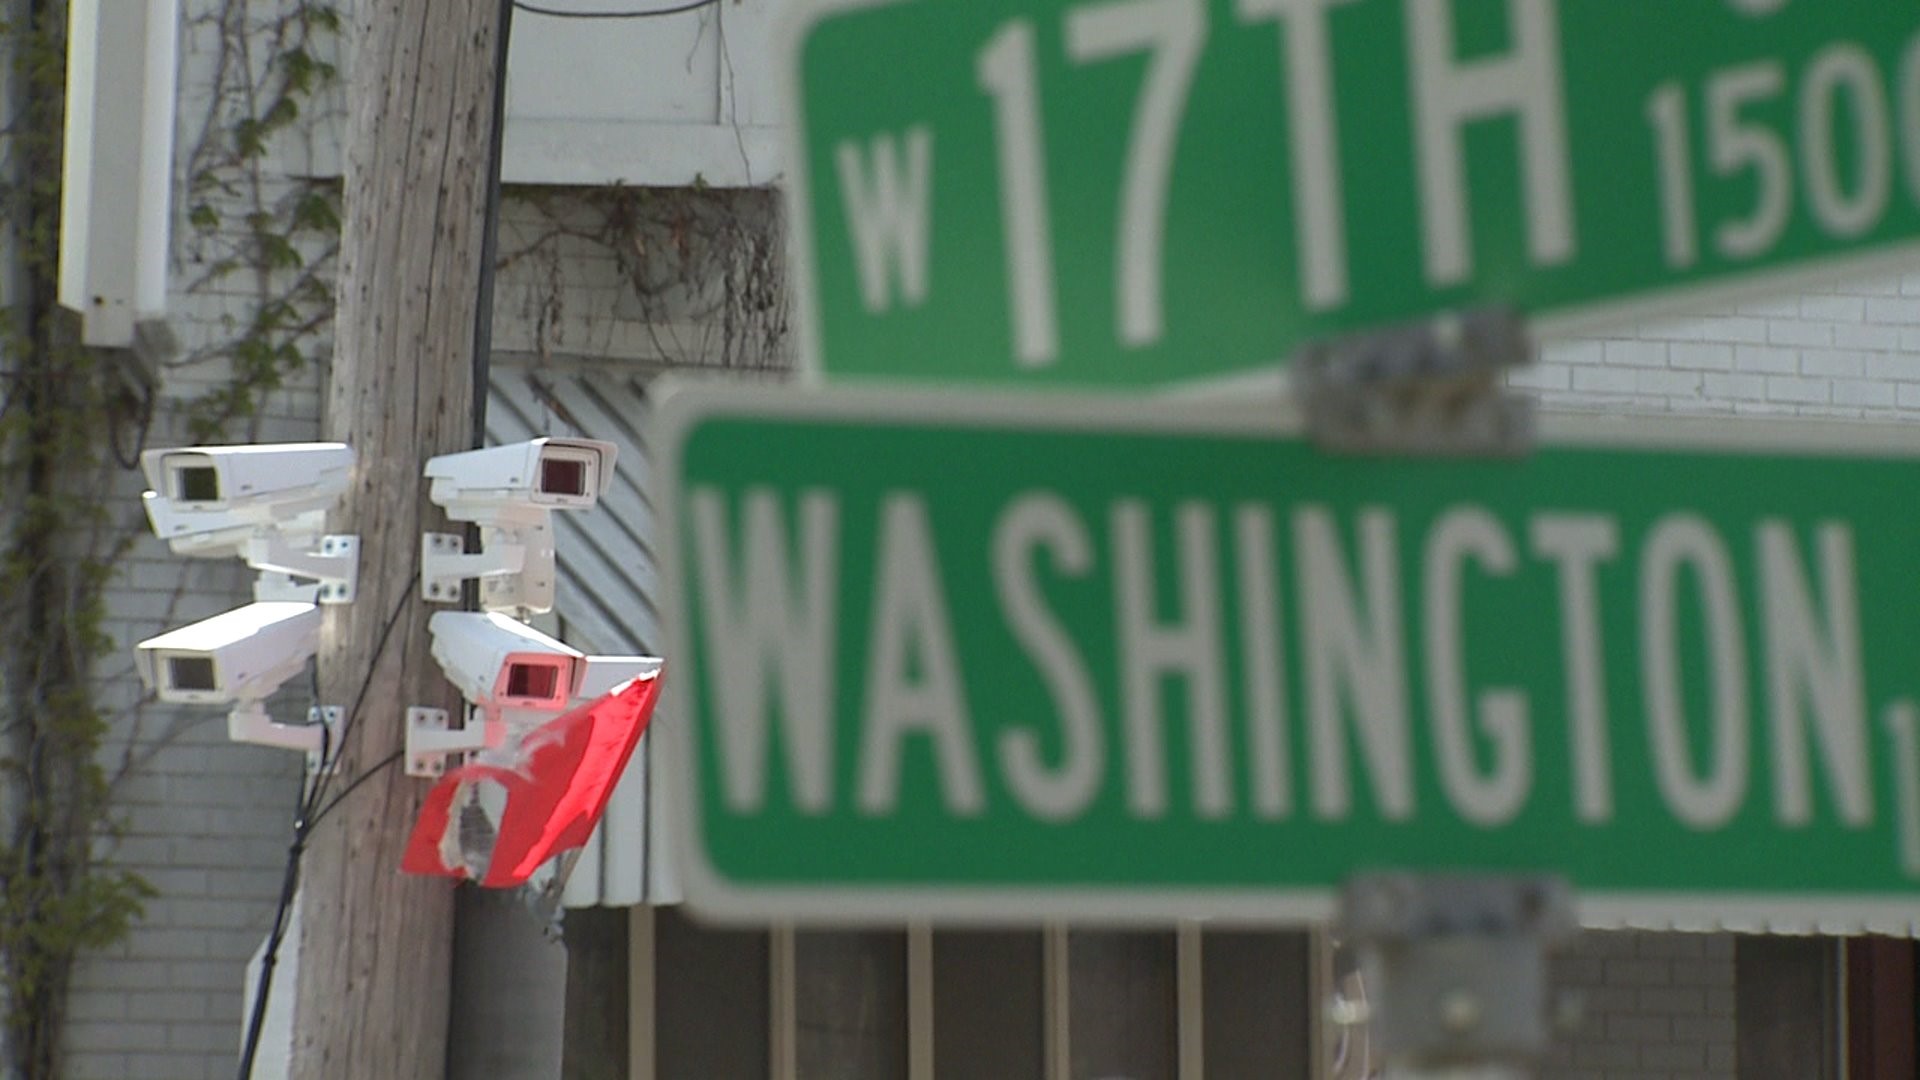 Washington Street Cameras go live next week